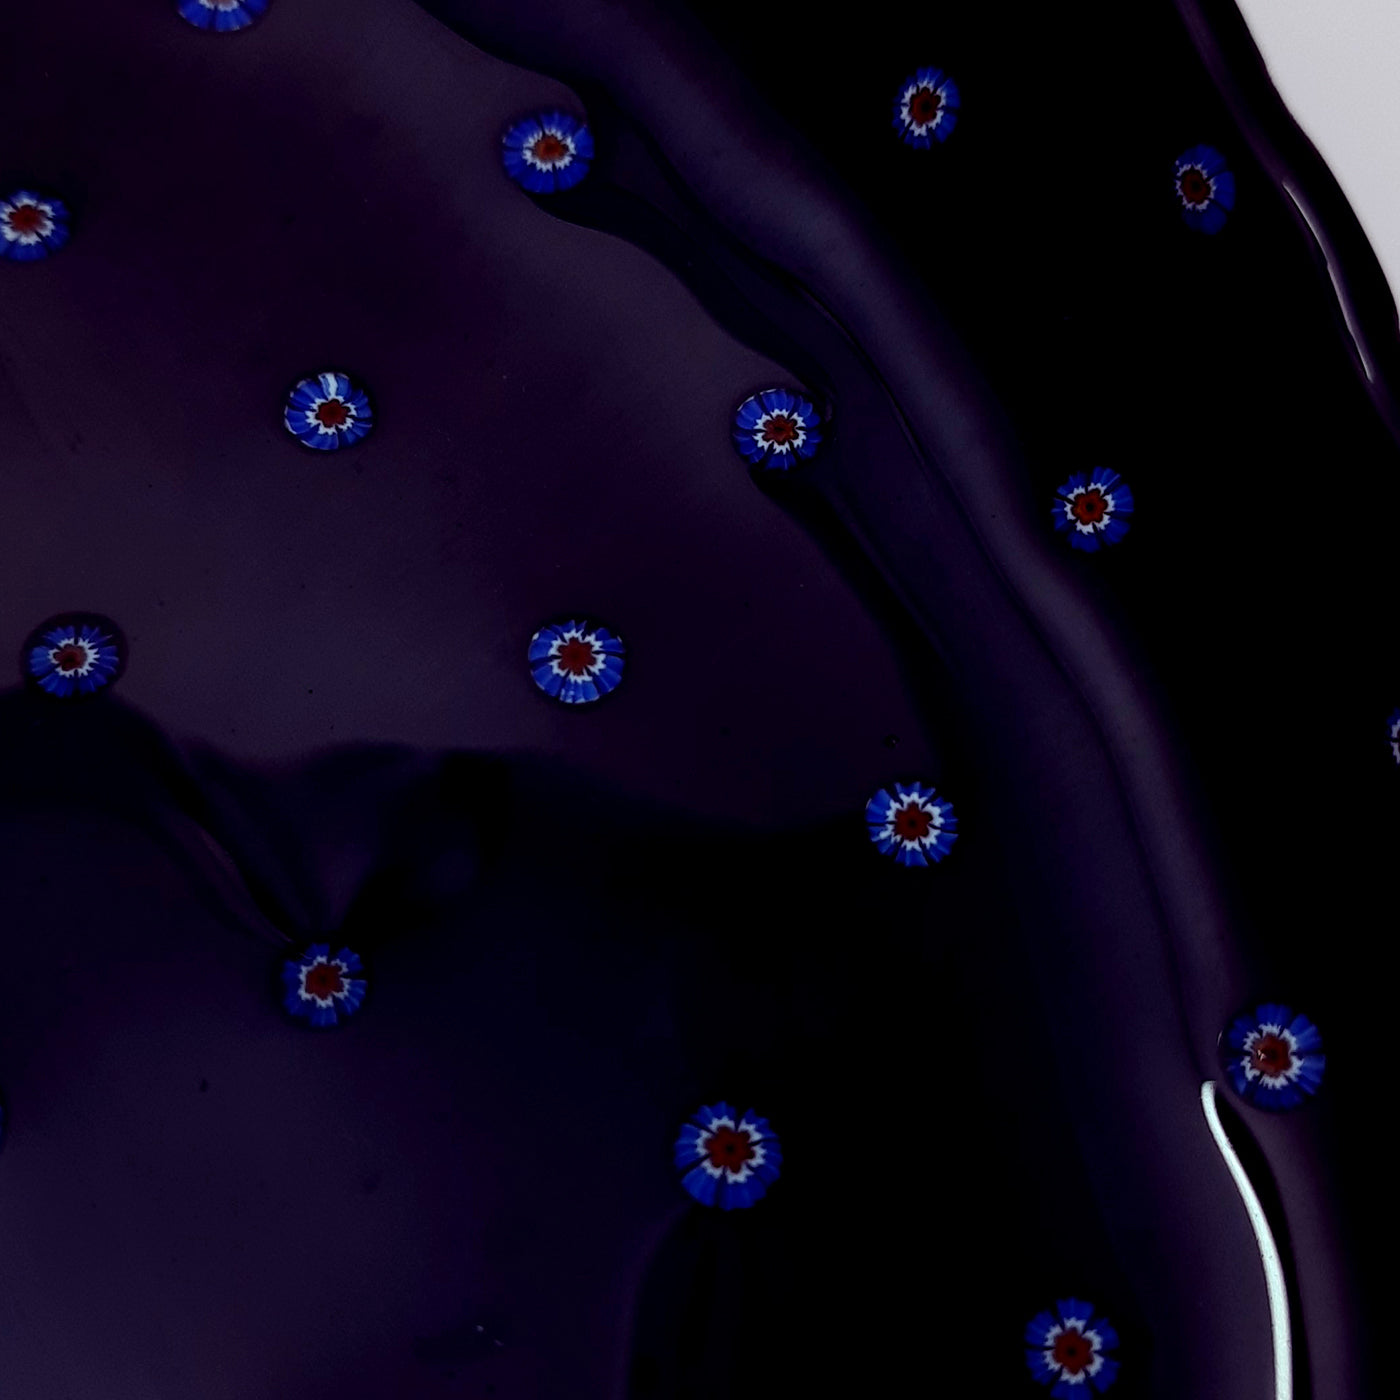 Bandeja de cristal negro con incrustaciones florales murrini - Vista alternativa 4